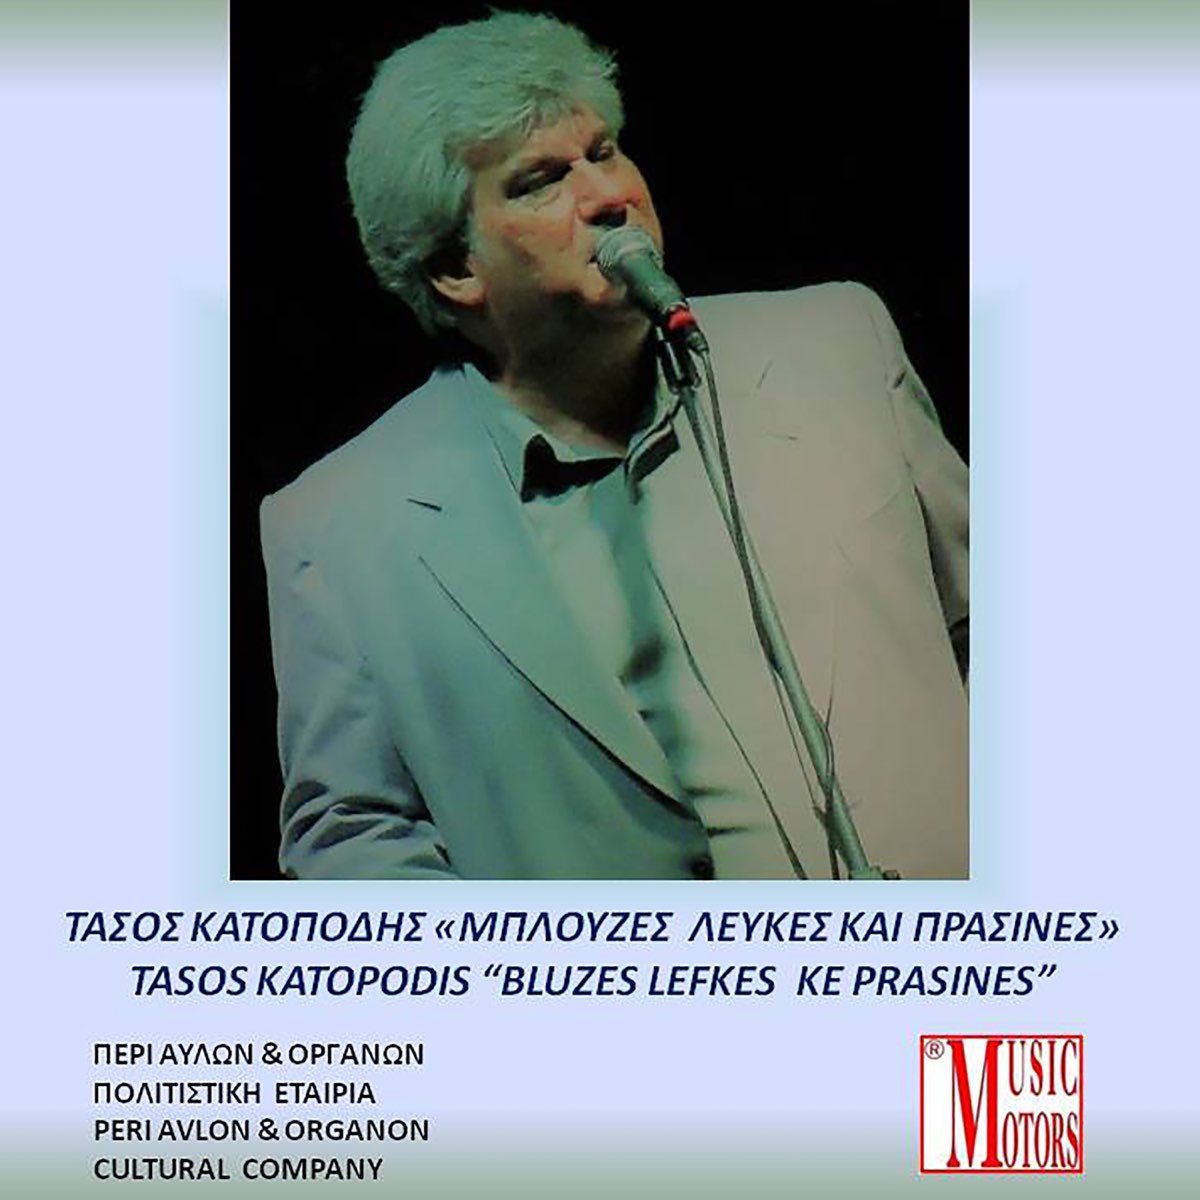 Bluzes Lefkes ke Prasines - Single - Album by TASOS KATOPODIS - Apple Music